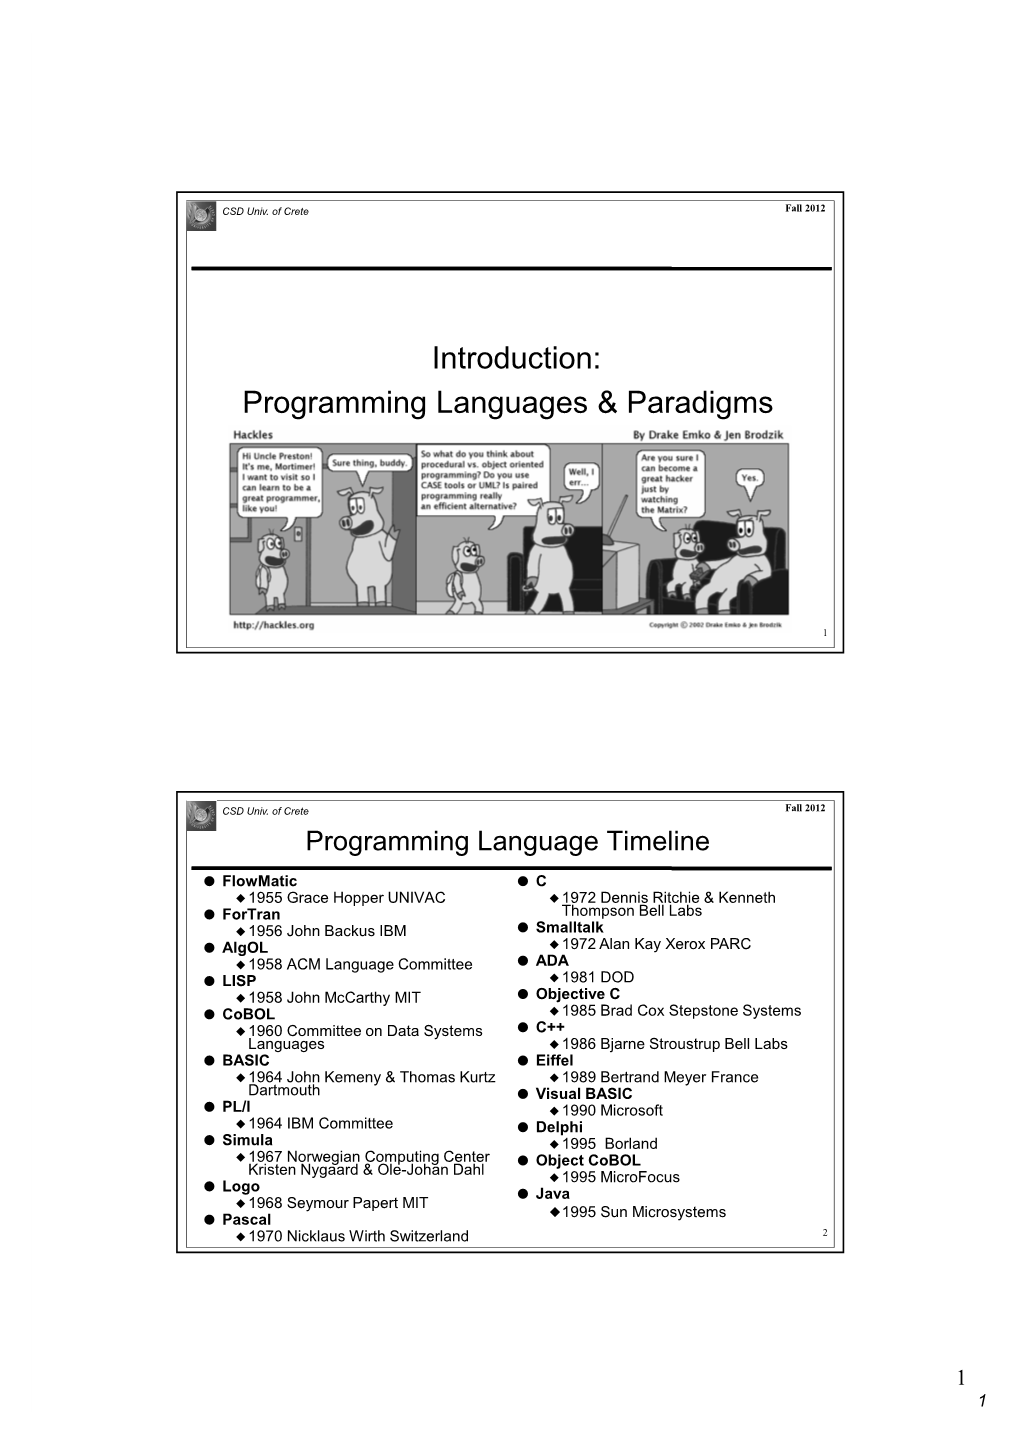 Introduction: Programming Languages & Paradigms